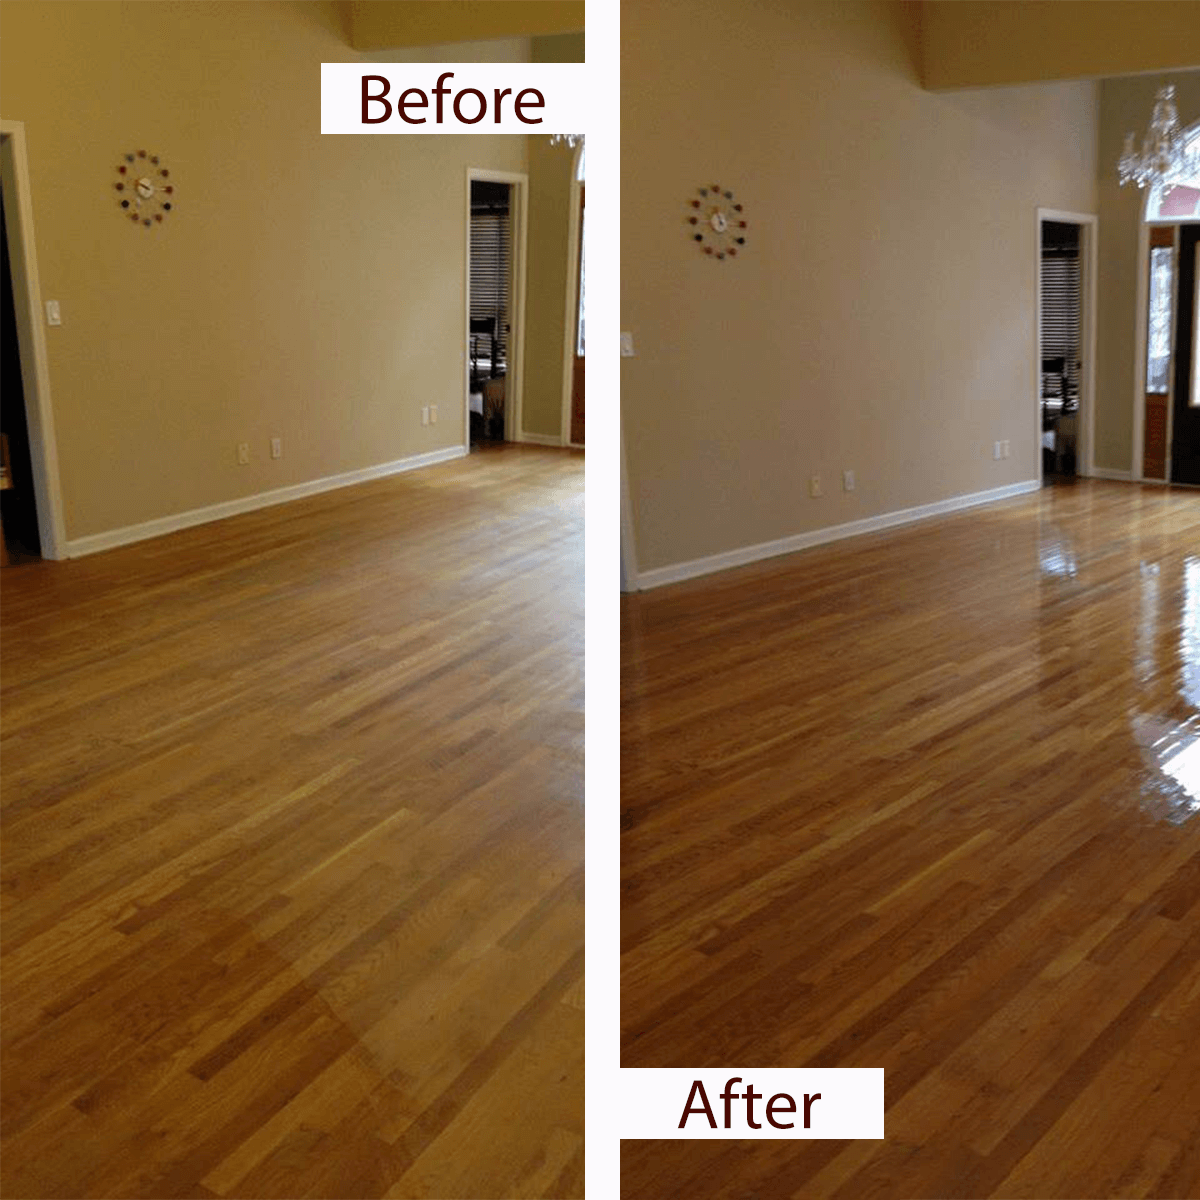 Before/After hardwood floor refinishing in green hills tn